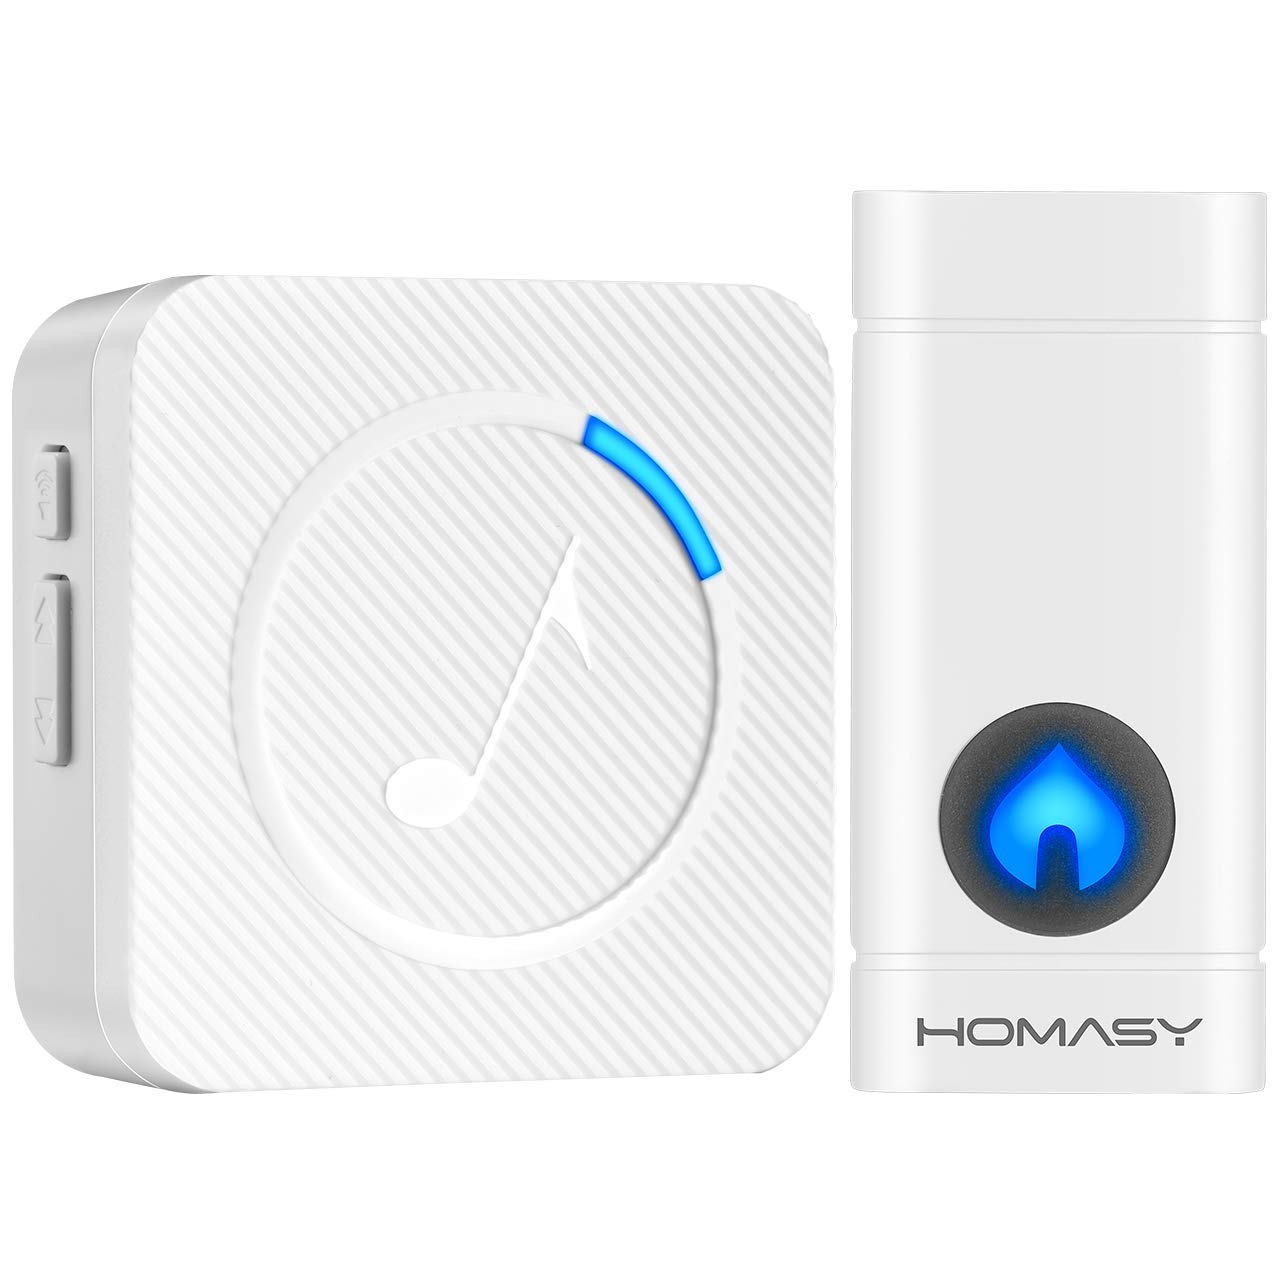 Homasy Mini Wireless Doorbell Review